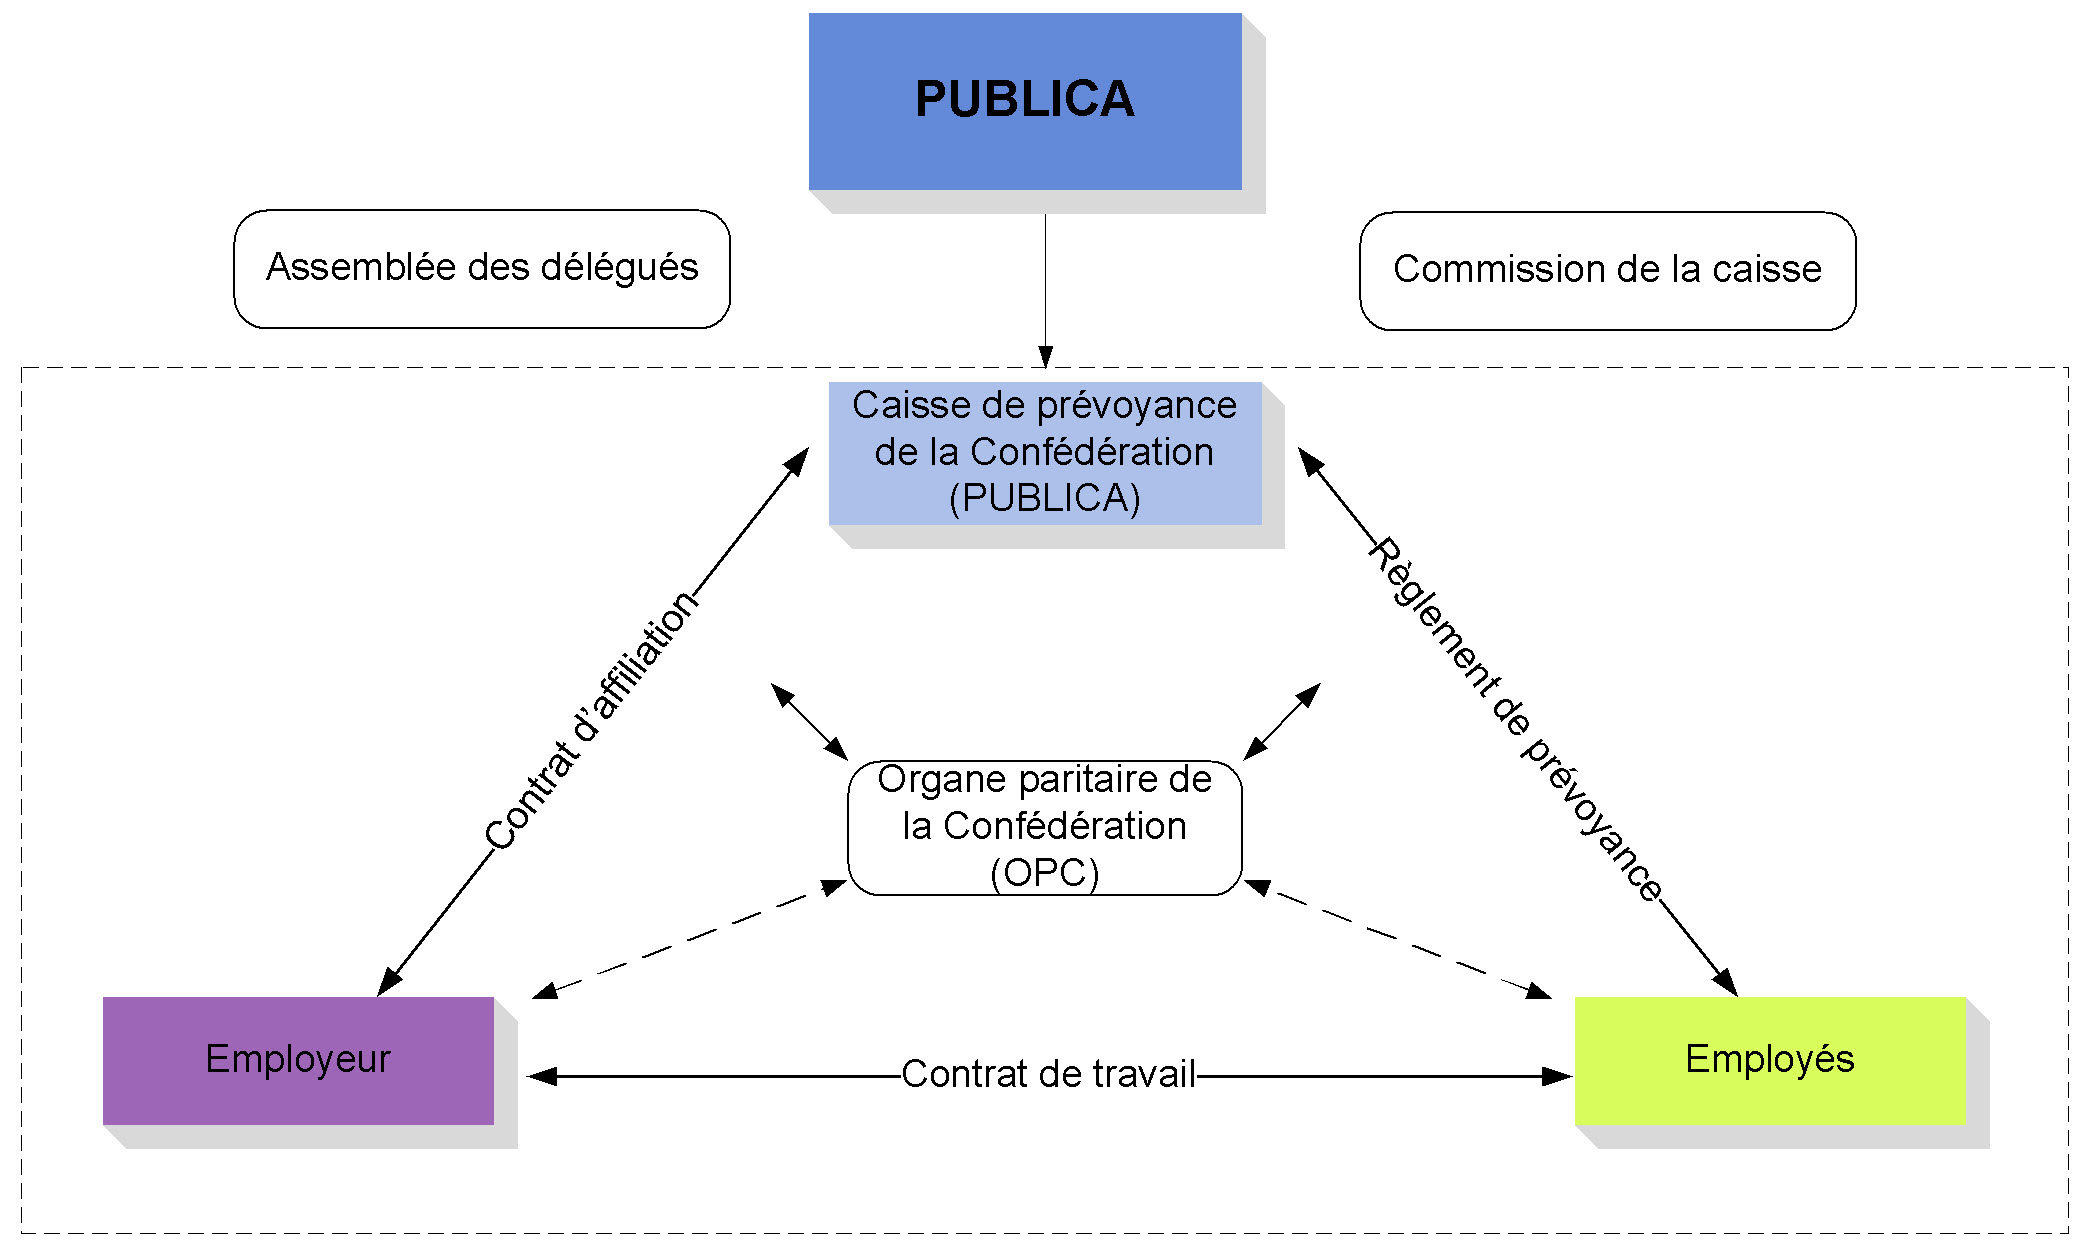 PUBLICA - Organisation et structure